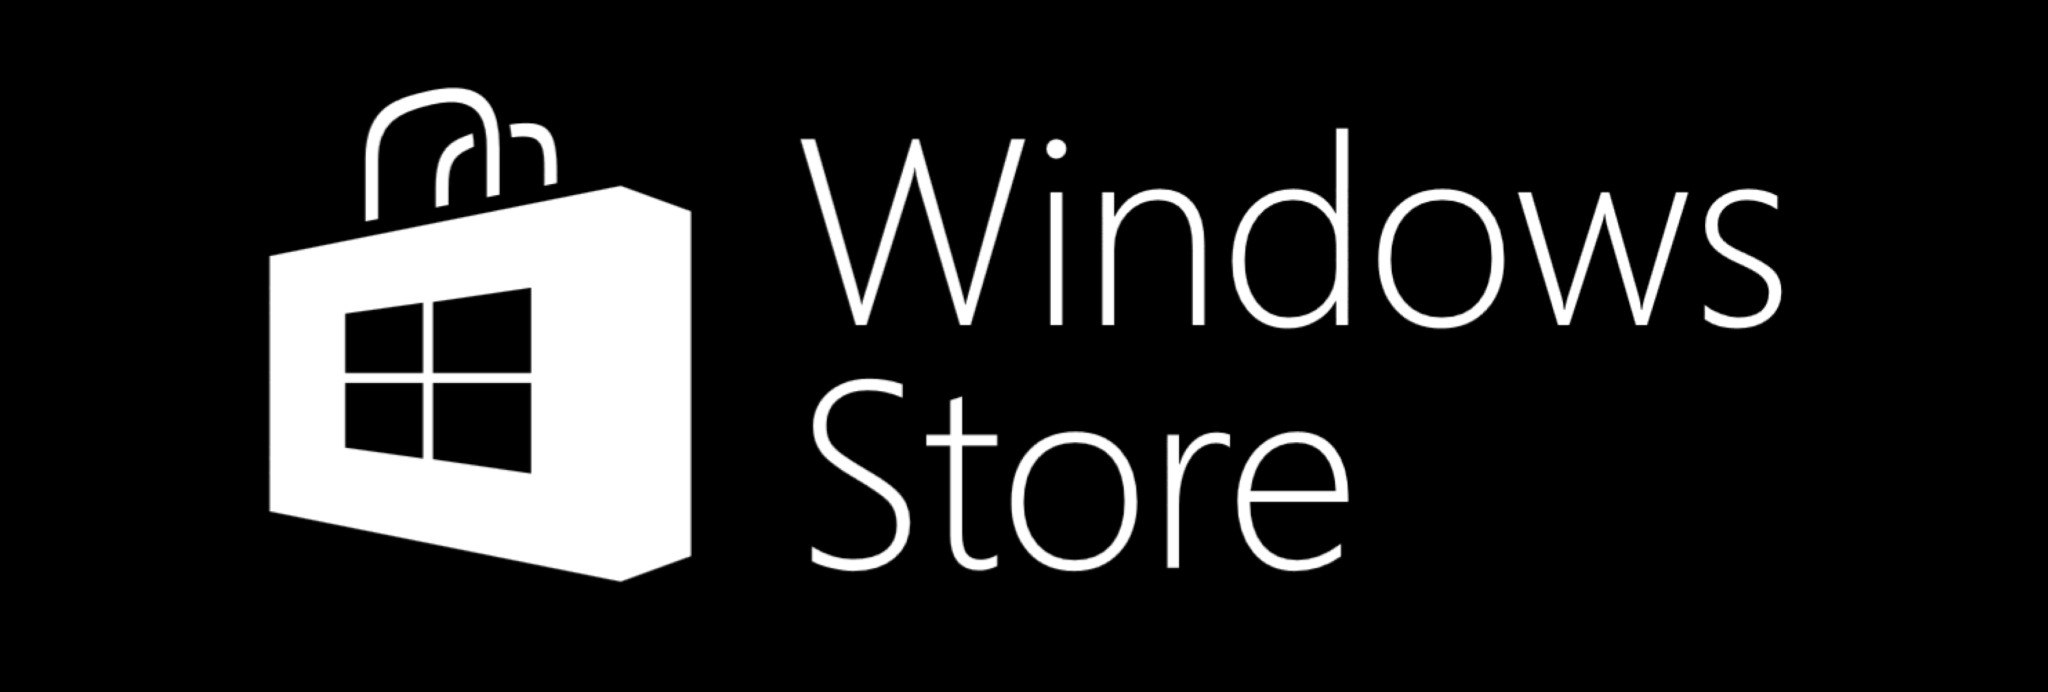 Windows Store. Windows Phone Store. Магазин Windows Store. Windows Phone Store магазин.